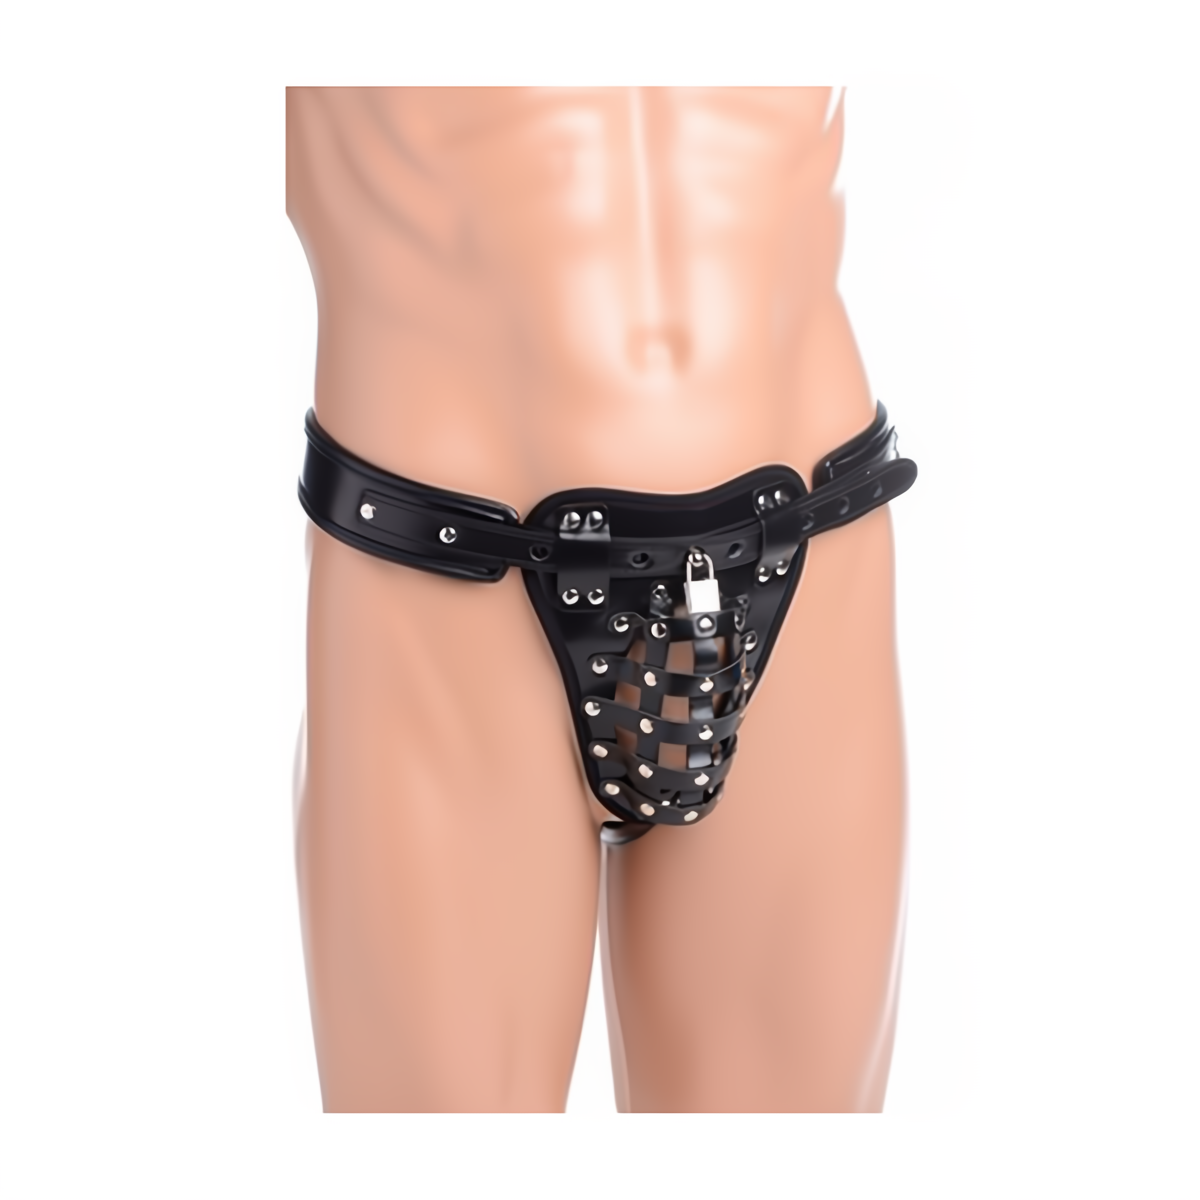 STRICT - Safety Net Male Chastity Belt